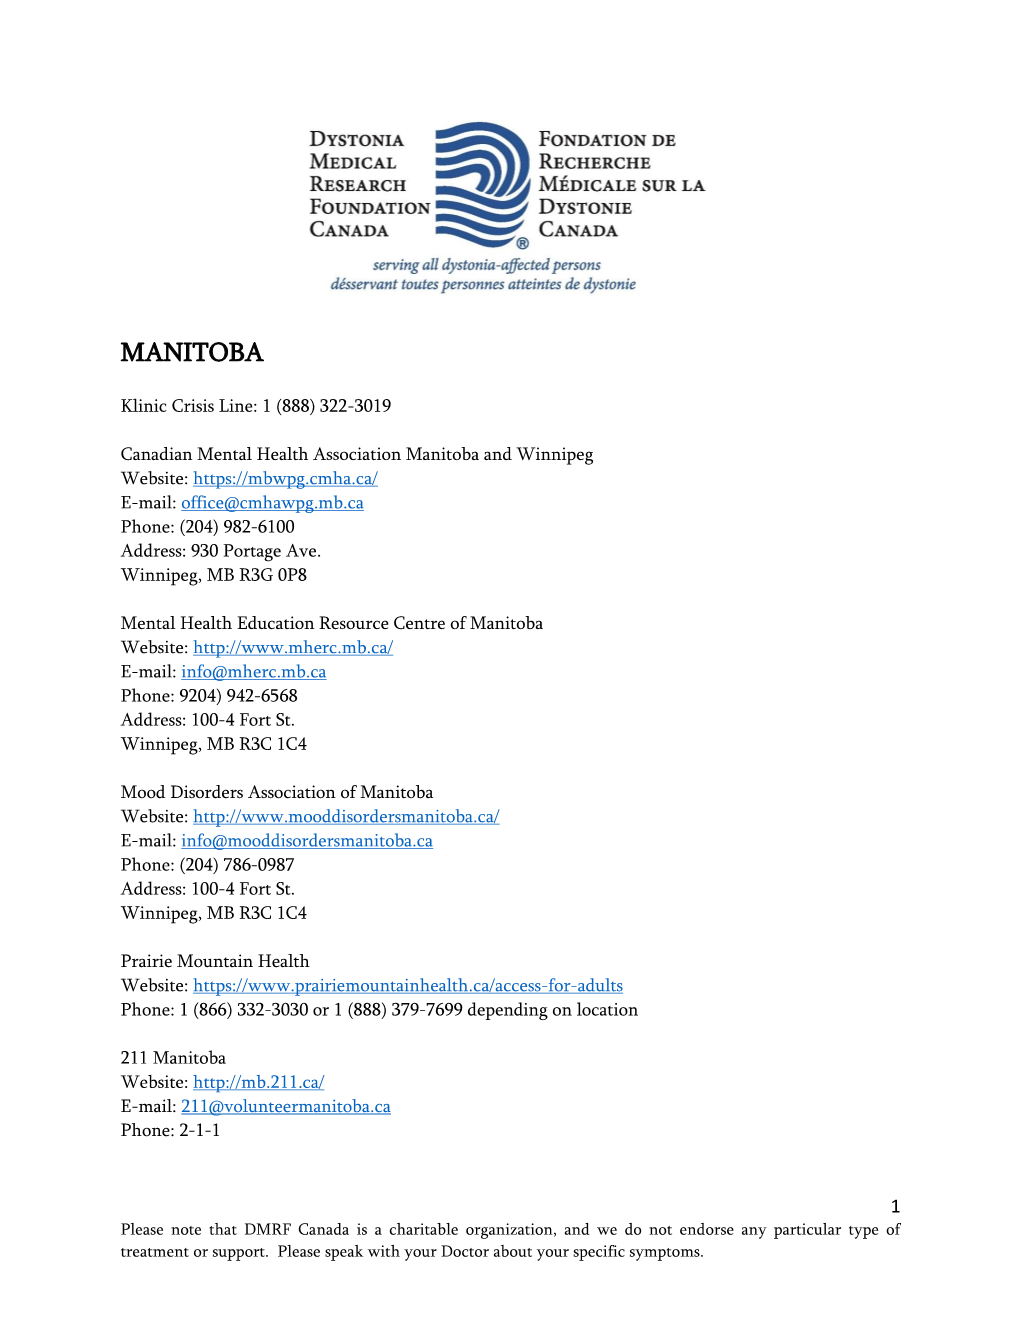 Manitoba Mental Health Resources 20190117 0.Pdf